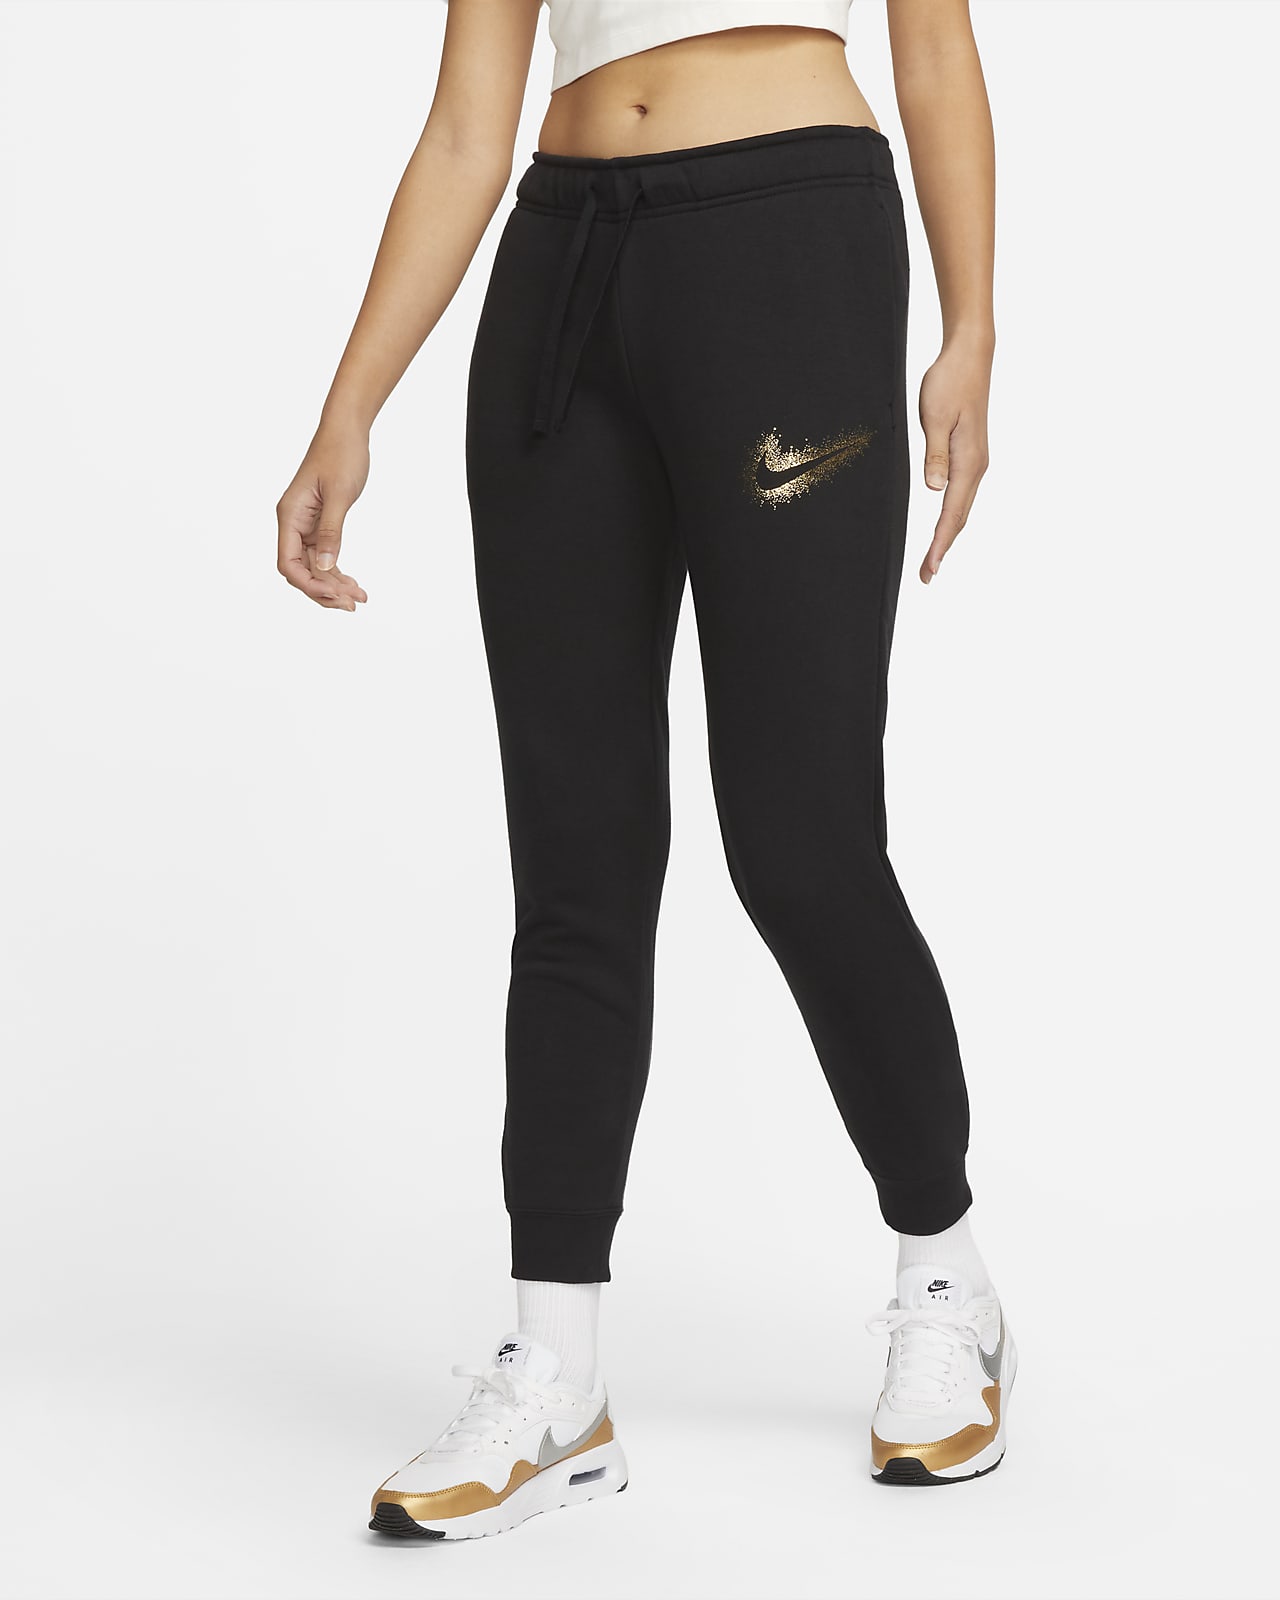 Donna Nike Nike - Pantaloni Sportivi Bianchi Con Logo Oro Rosa/